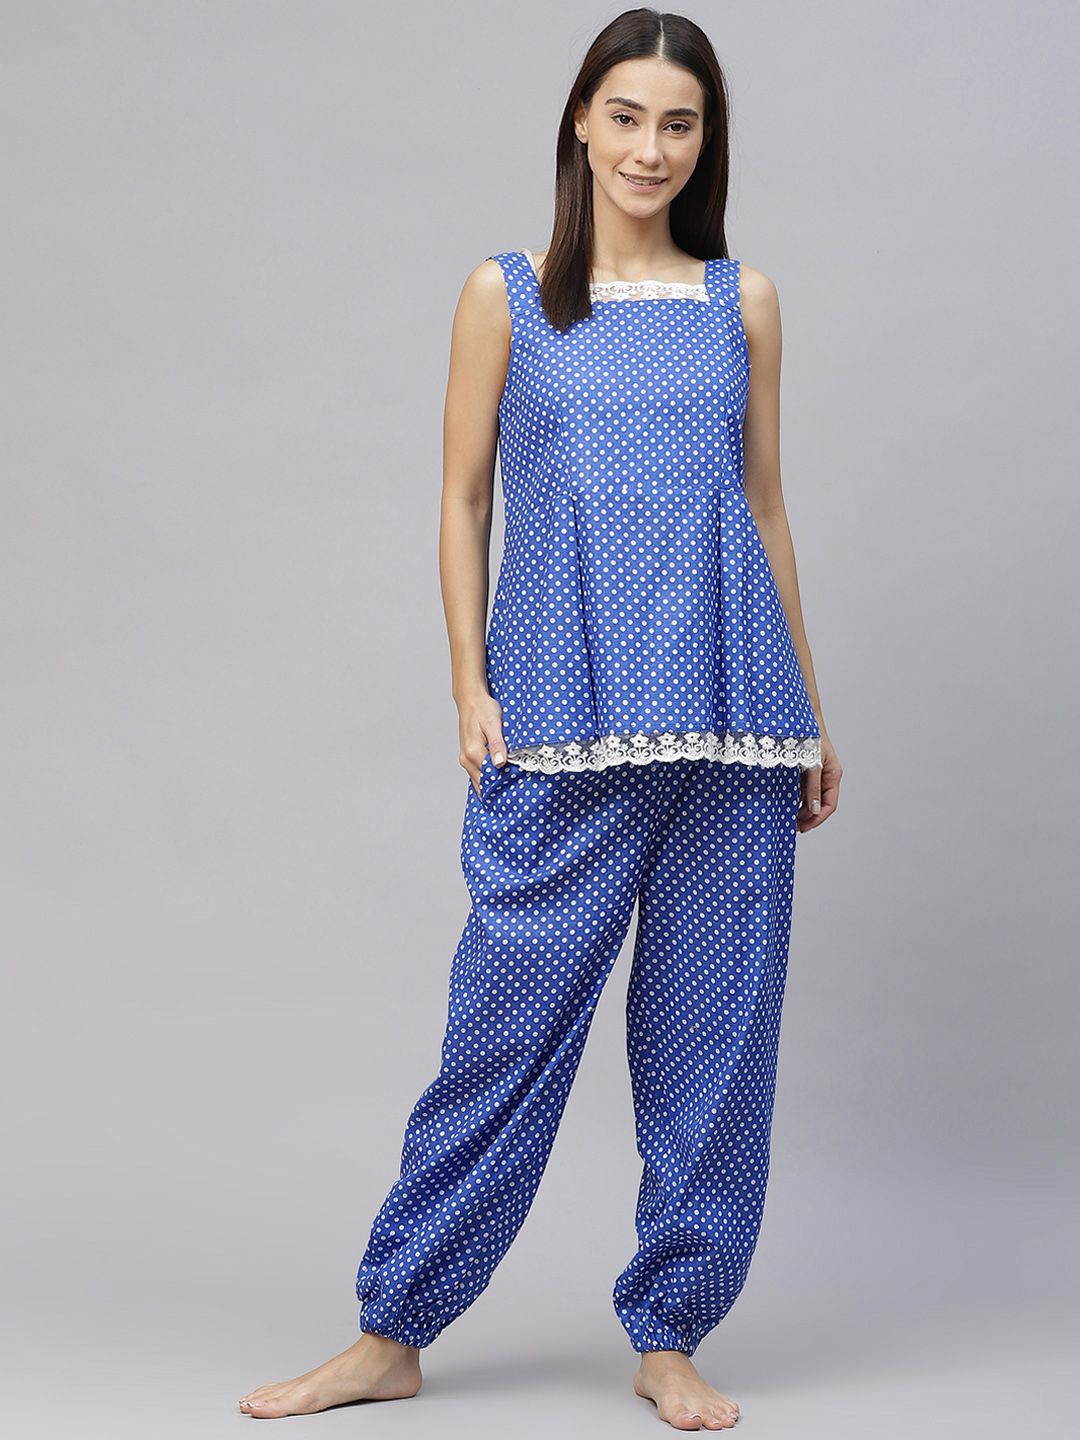 Laado - Pamper Yourself Women Blue & White Polka Dot Print Lace Inserts Cotton Pyjama Set Price in India